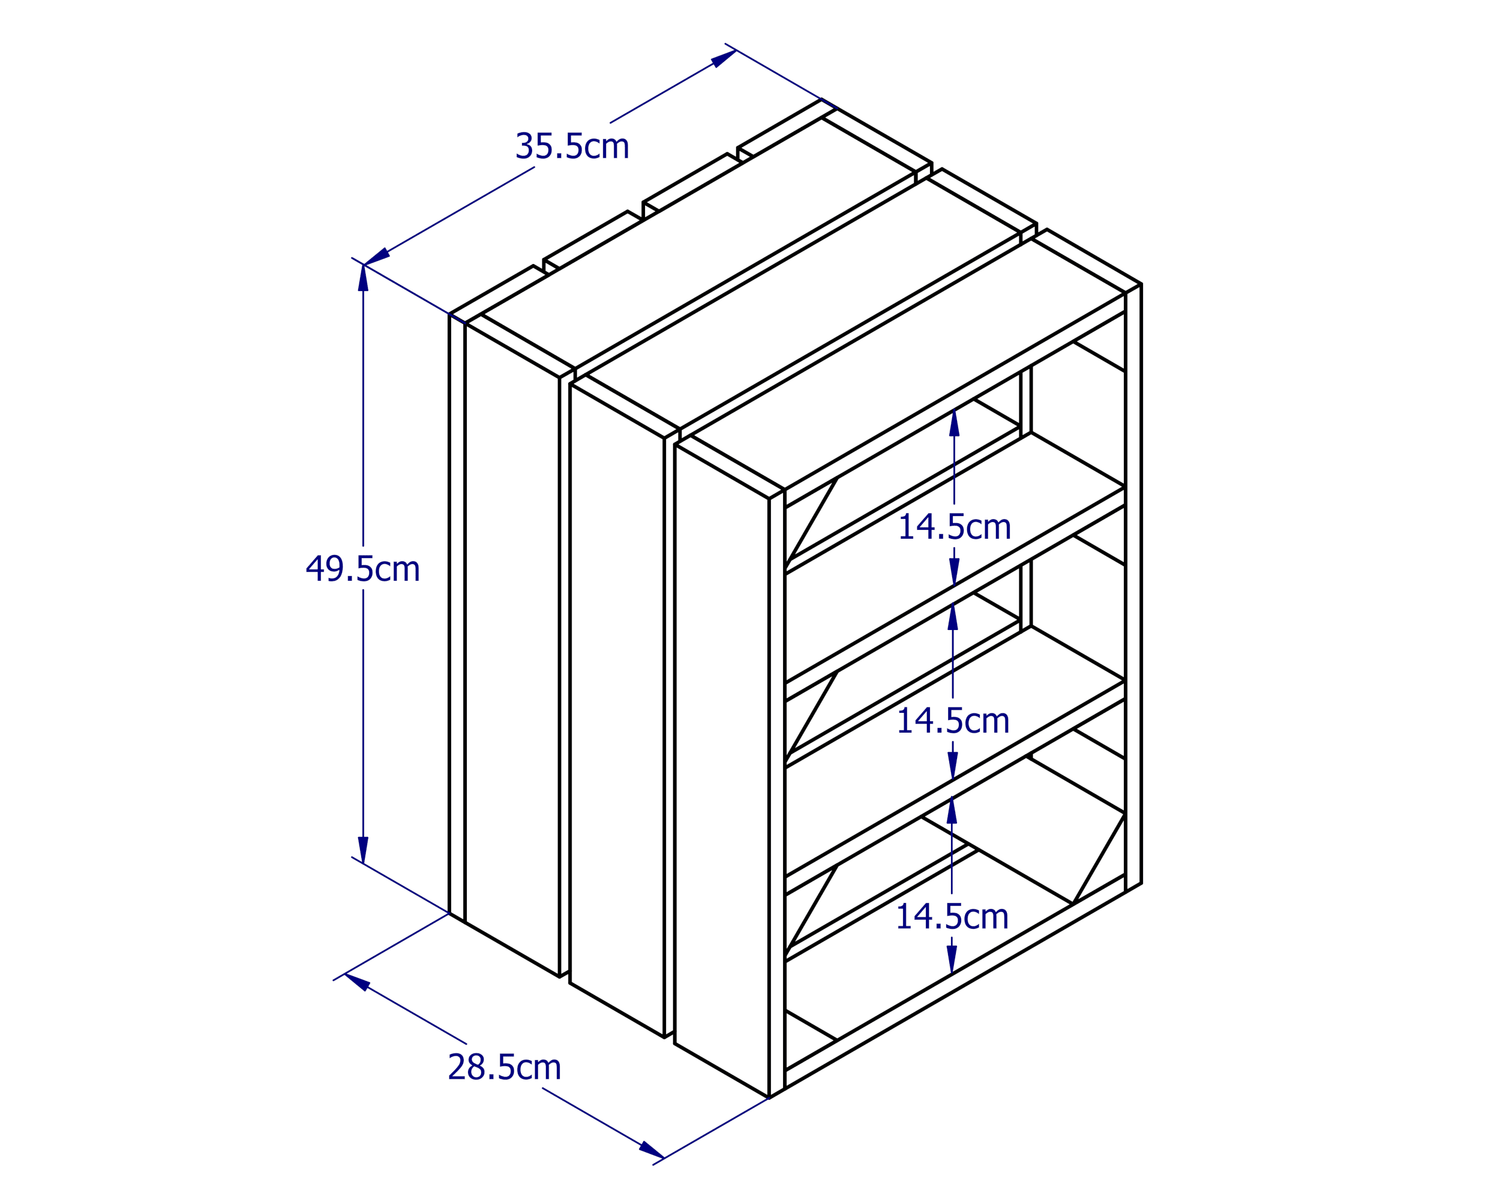 Single Shoe Rack Crate in Medium Brown - Great Crates